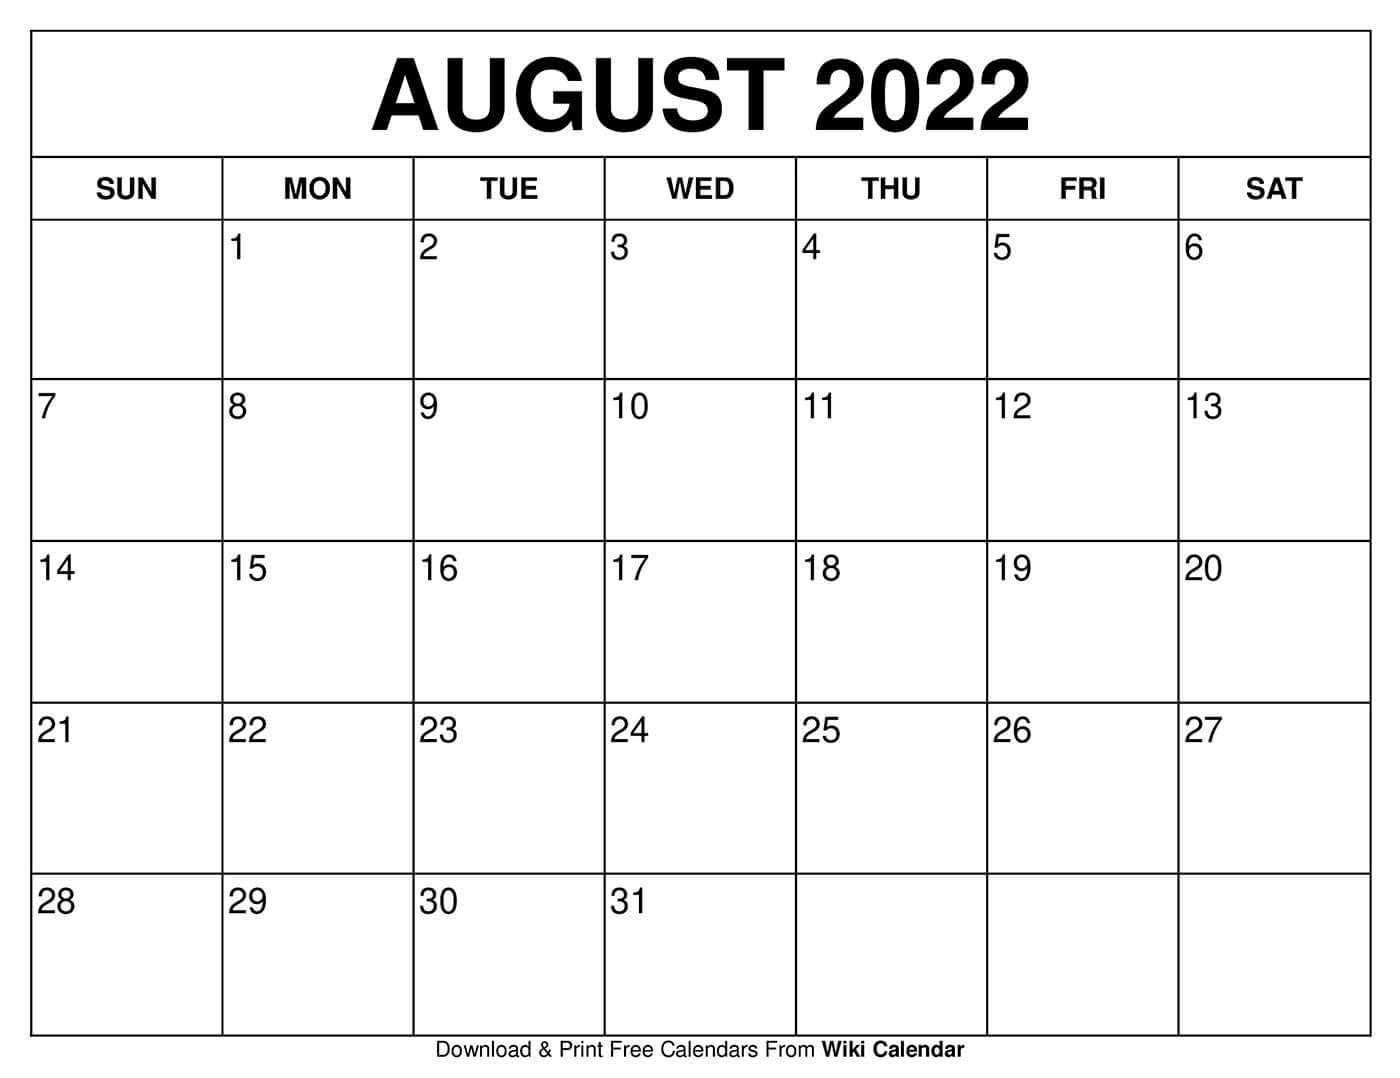 Print August 2022 Calendar Free Printable August 2022 Calendars - Wiki Calendar